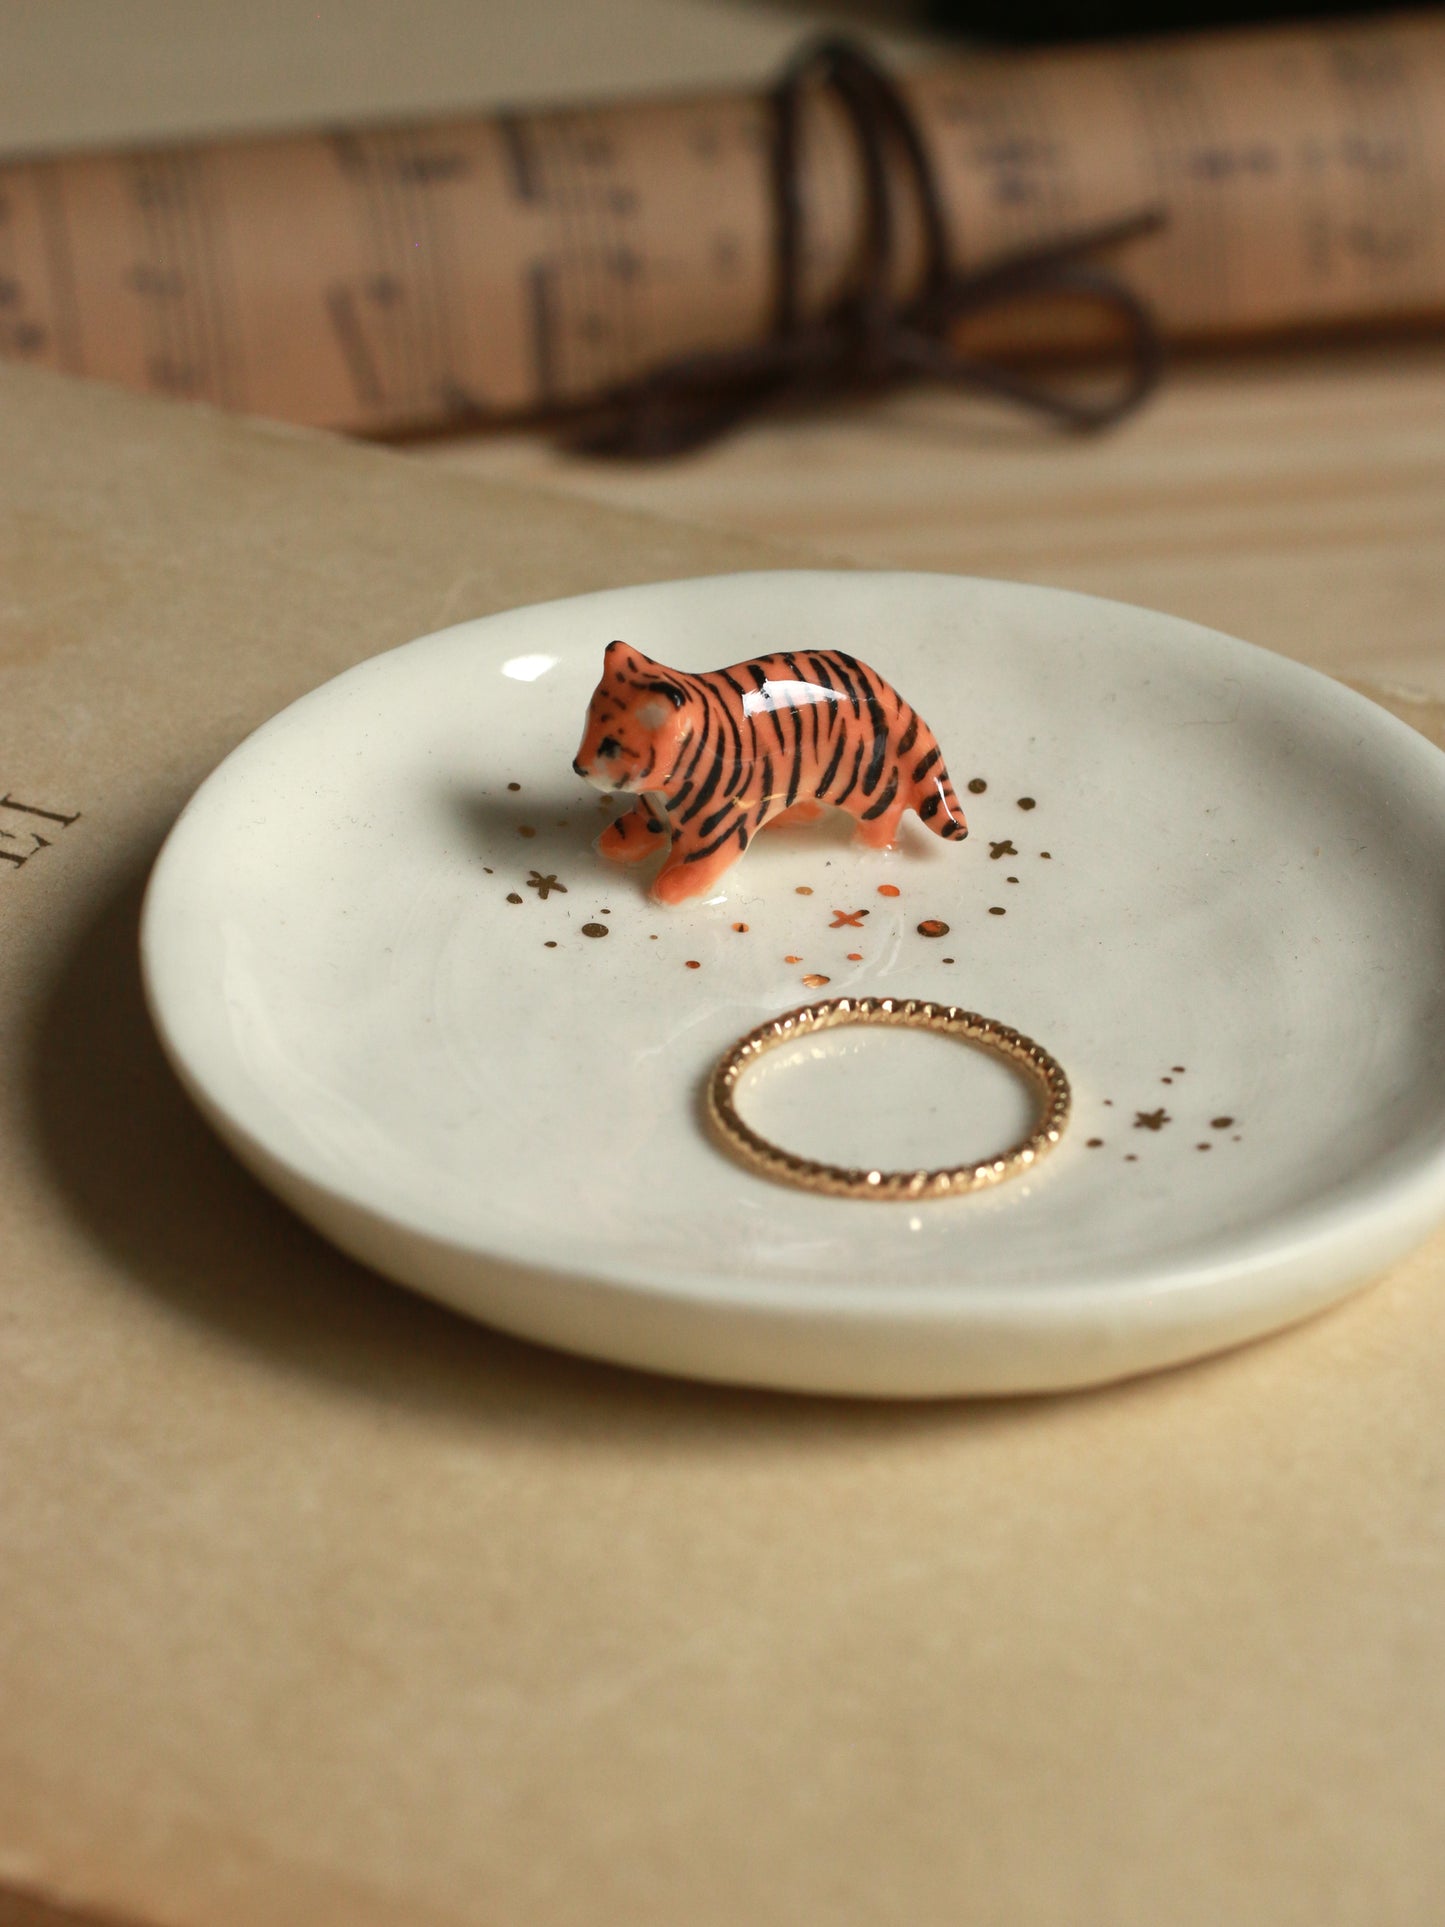 Tiger Ring Dish - Porcelain jewelry dish